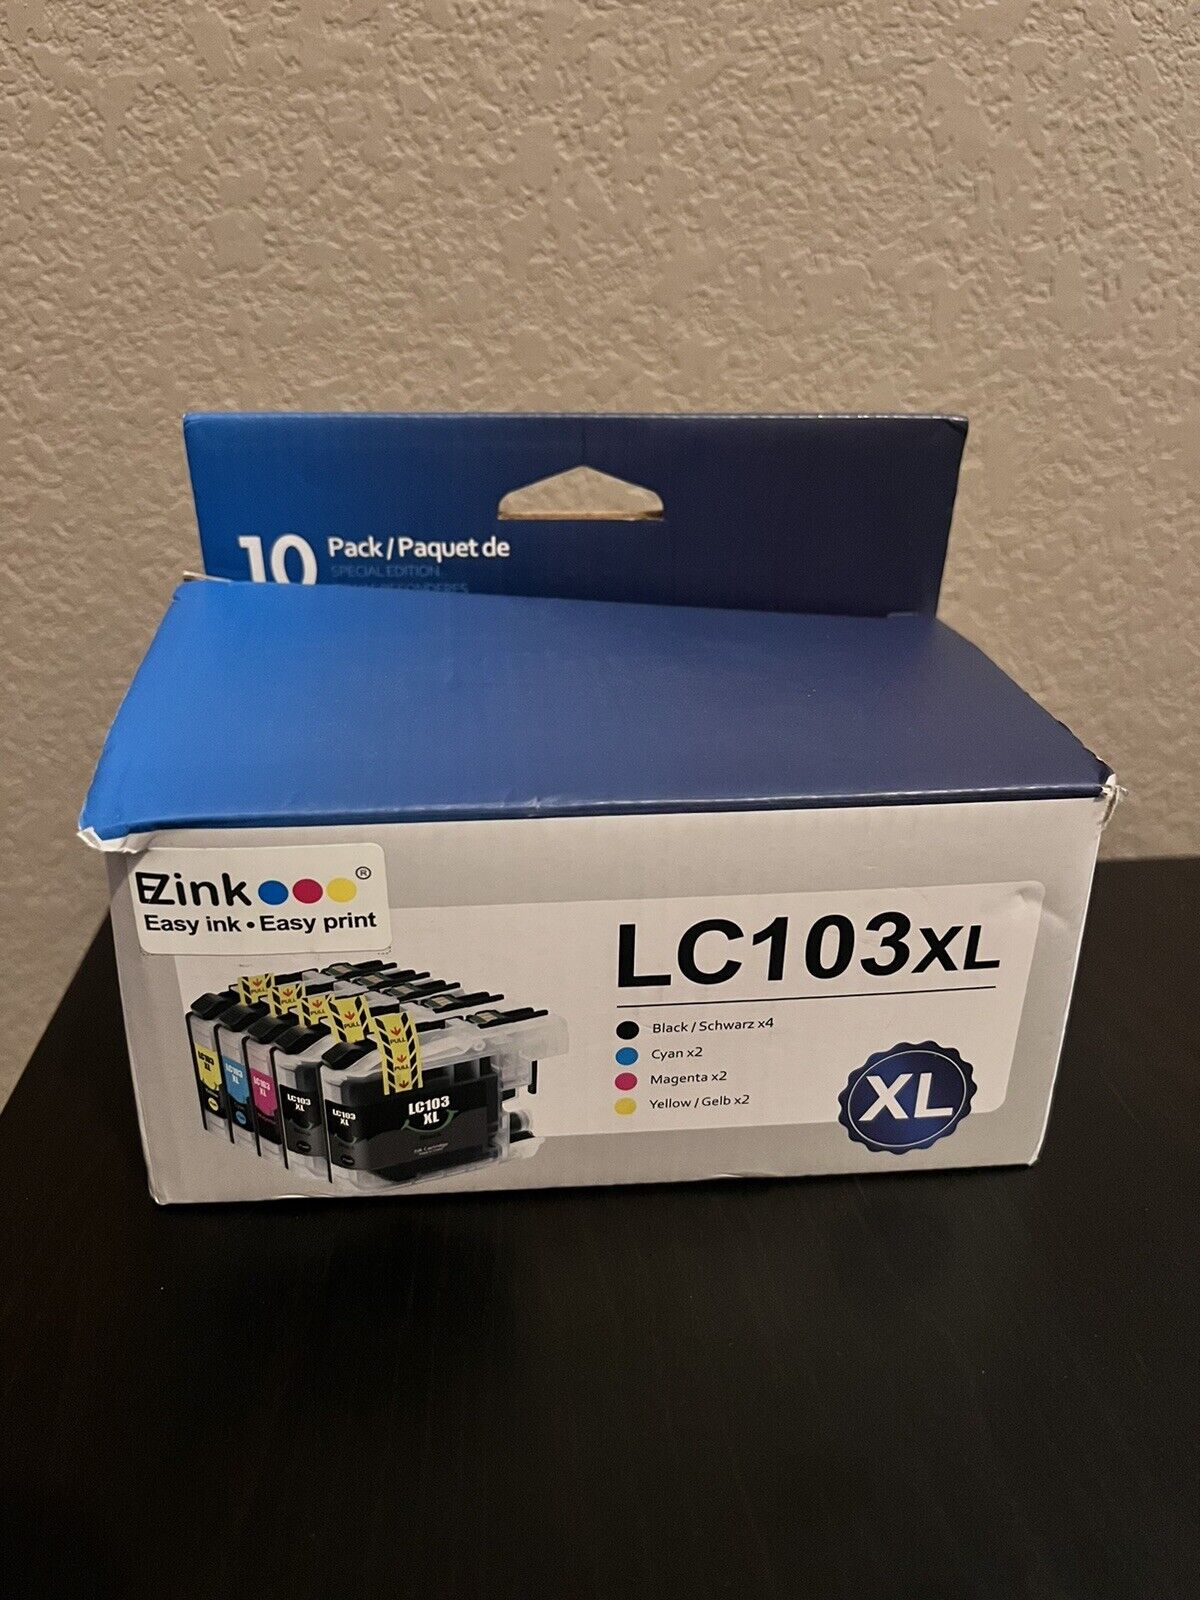 Brother Ezink Ink Printer Cartridges LC103 XL - 10 Pack